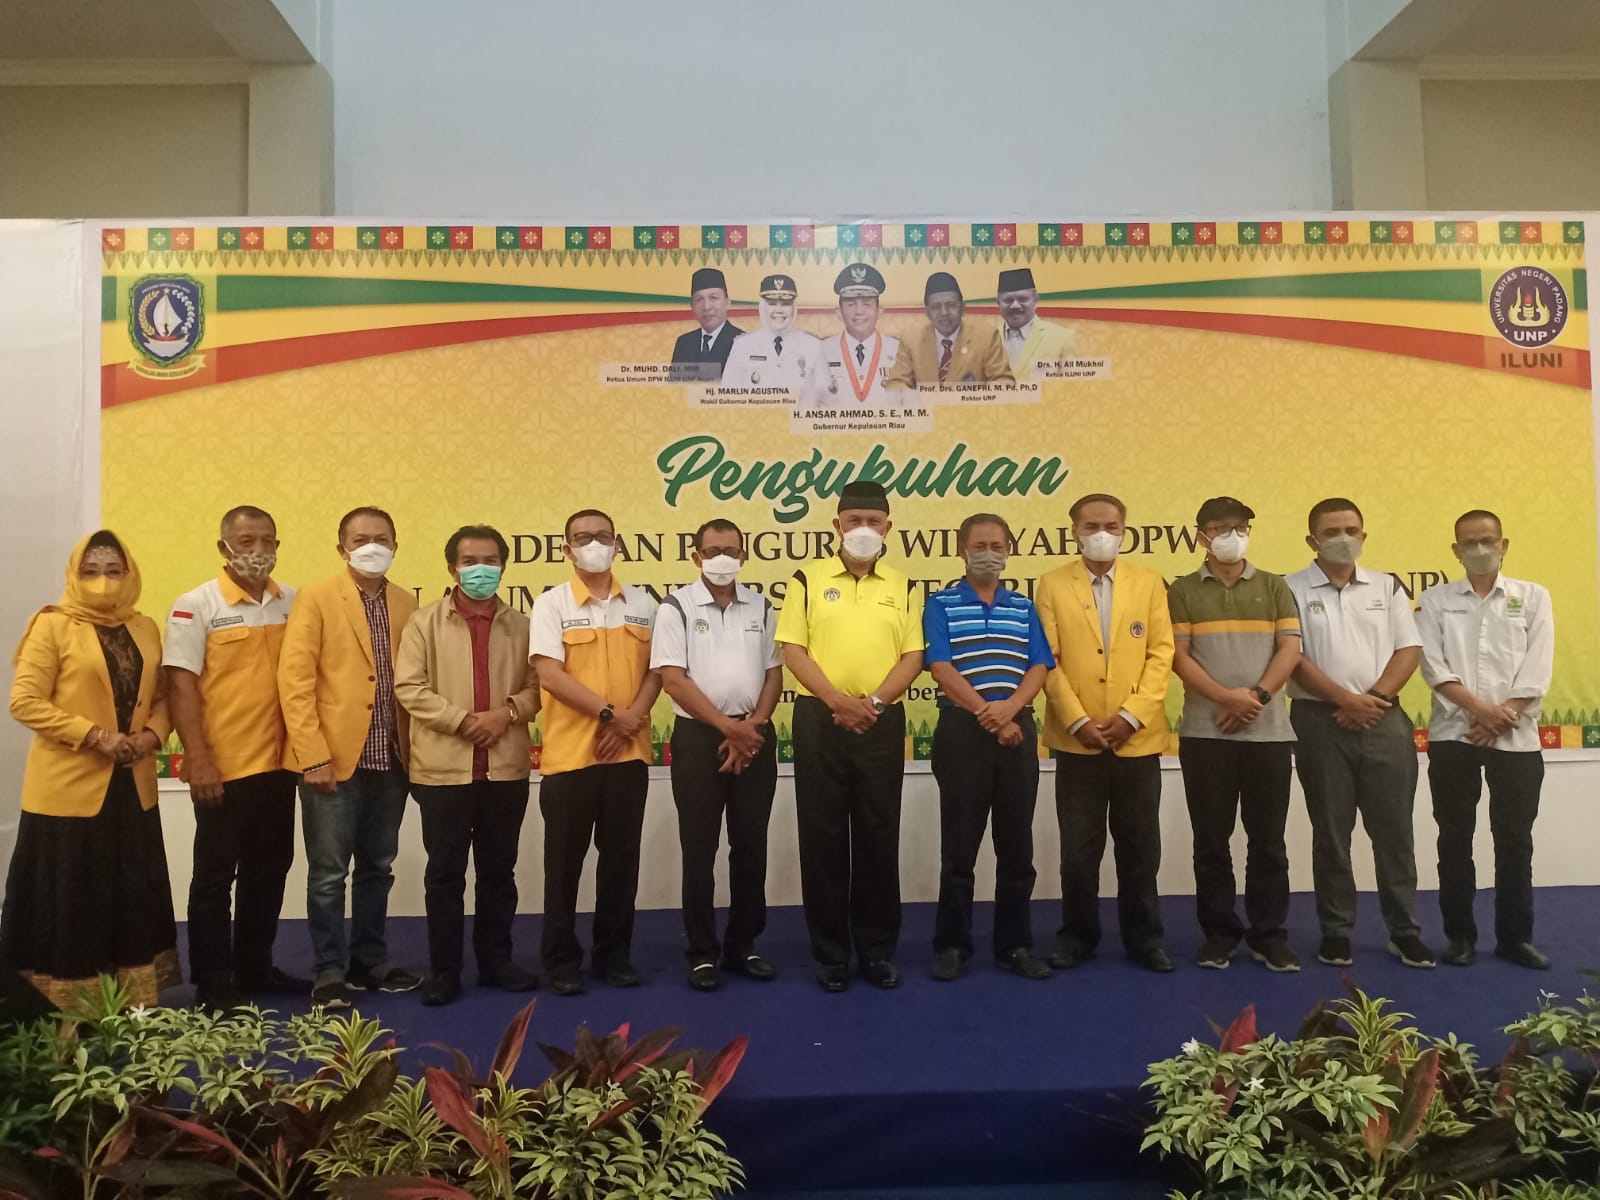 Gubernur Sumbar, Mahyeldi, menghadiri pengukuhan pengurus ILUNI UNP Provinsi Kepulauan Riau, periode 2021-2025, Minggu (17/10/2021), di Batam.